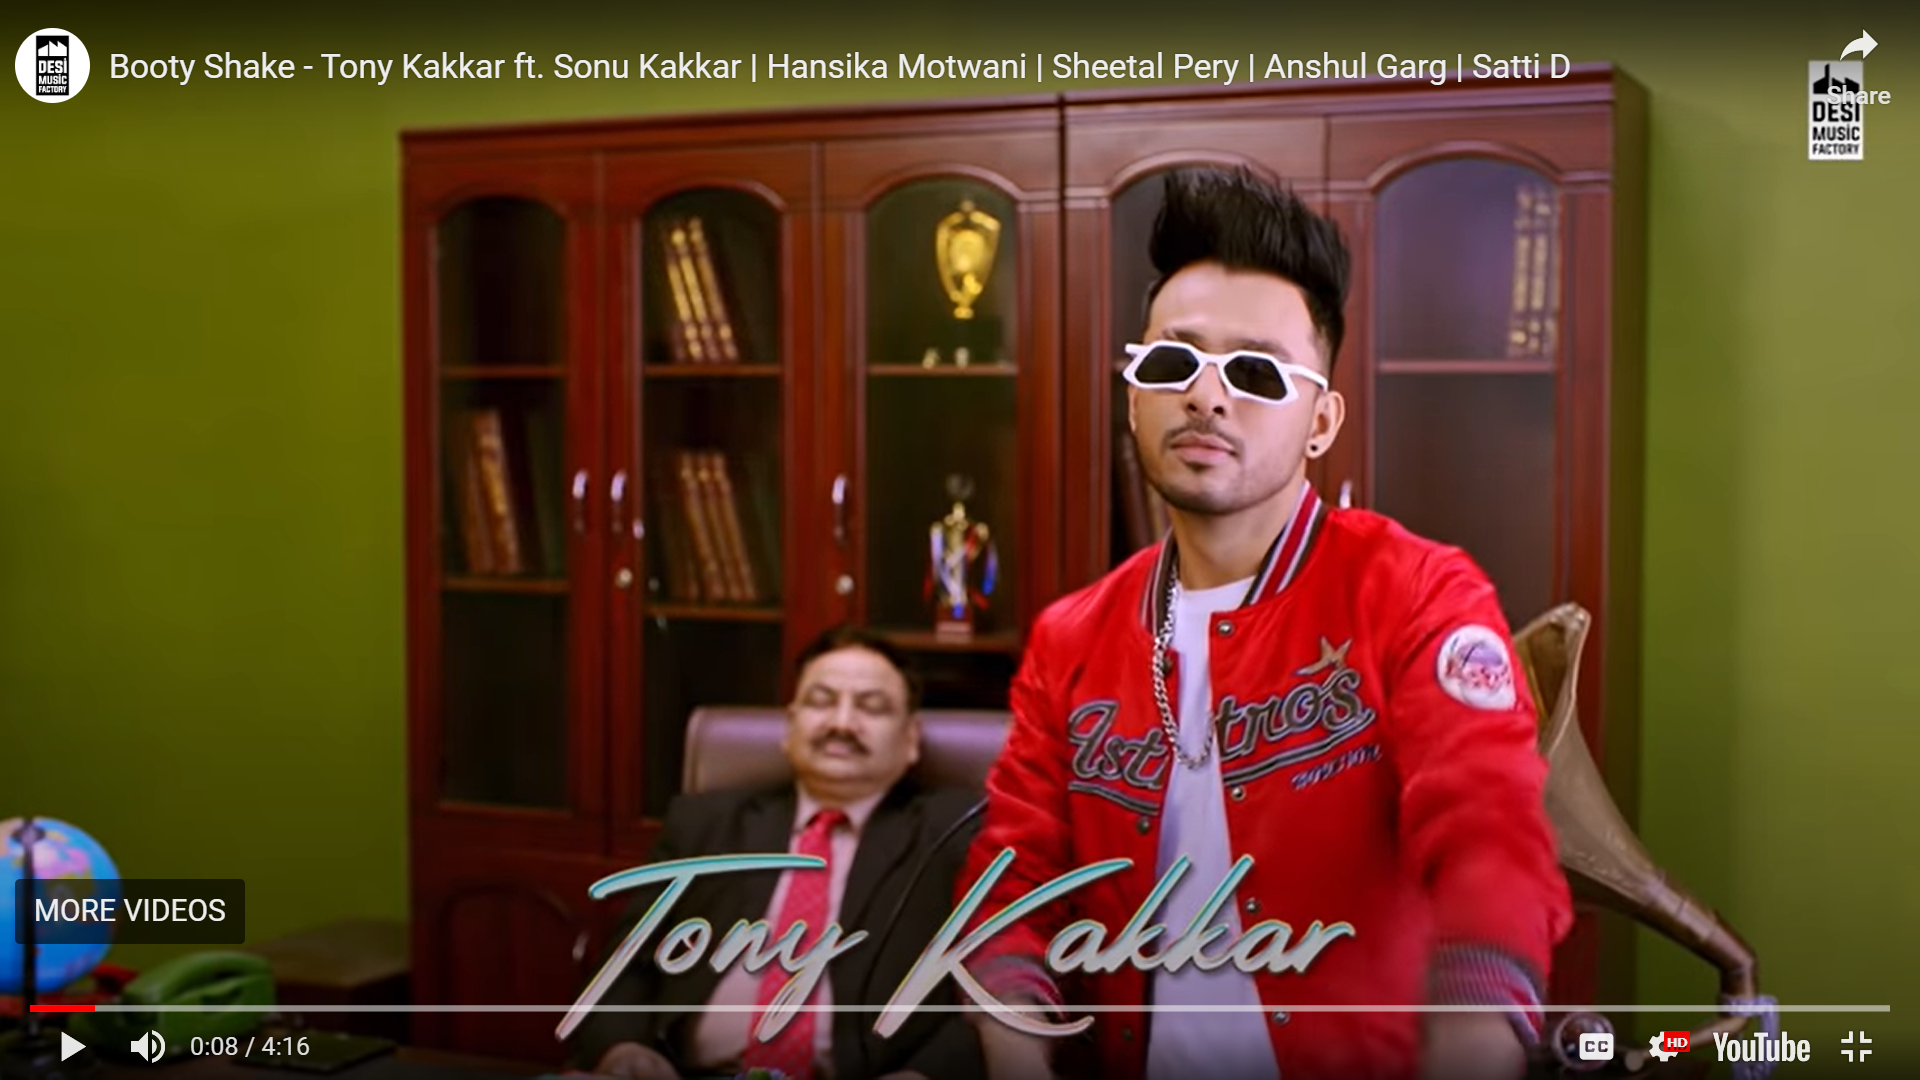 Booty Shake by Tony kakkar and Sonu Kakkar (Striaight out of India)